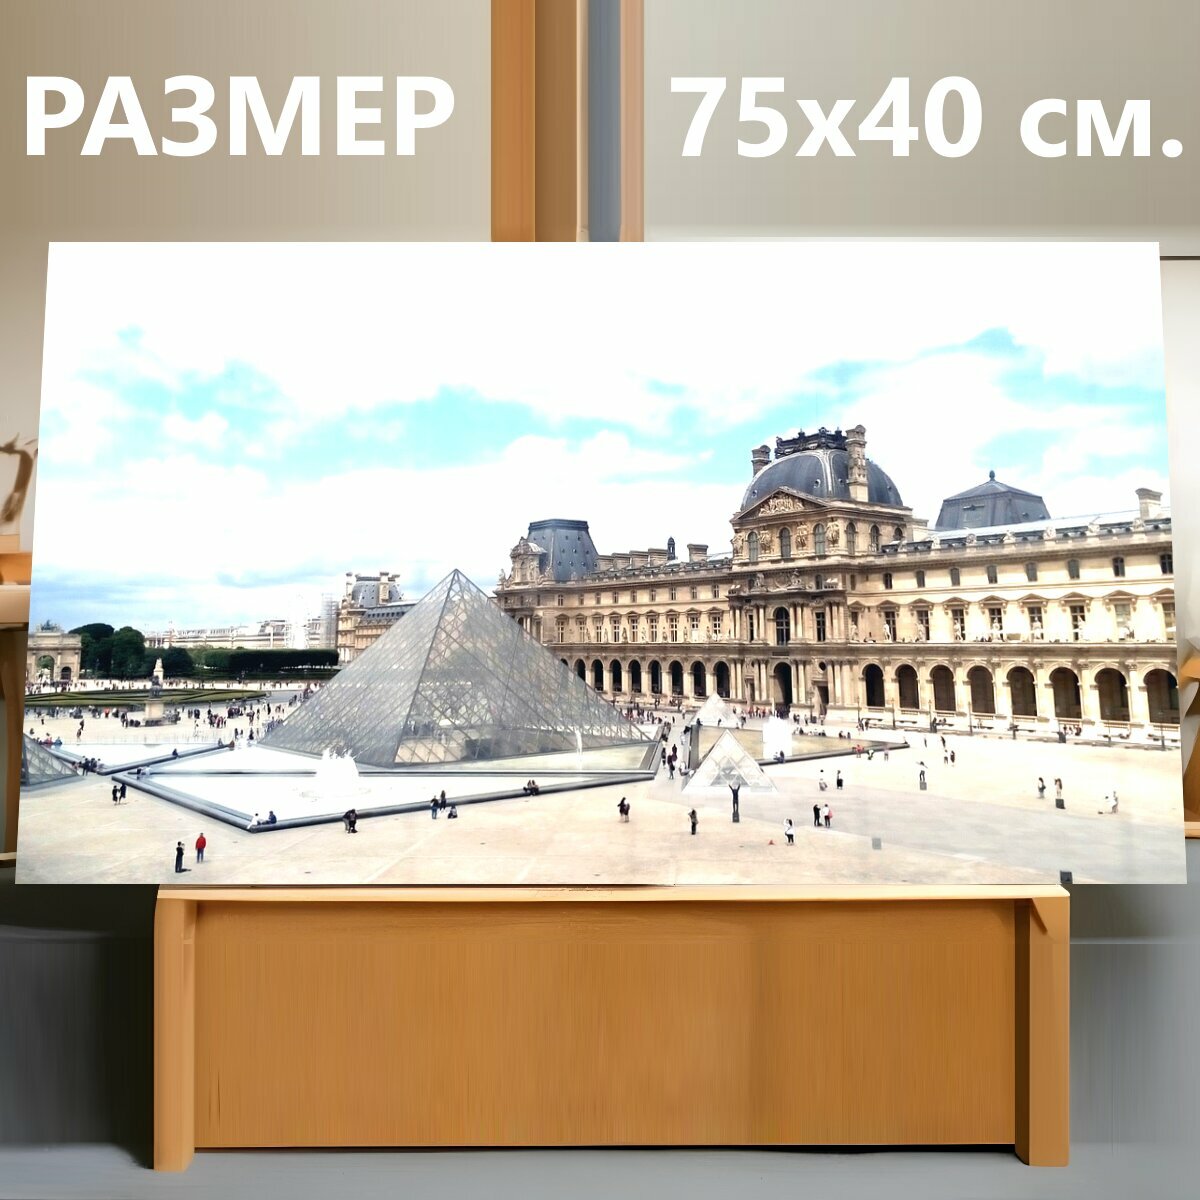 Картина на холсте "Париж, франция, лувр" на подрамнике 75х40 см. для интерьера